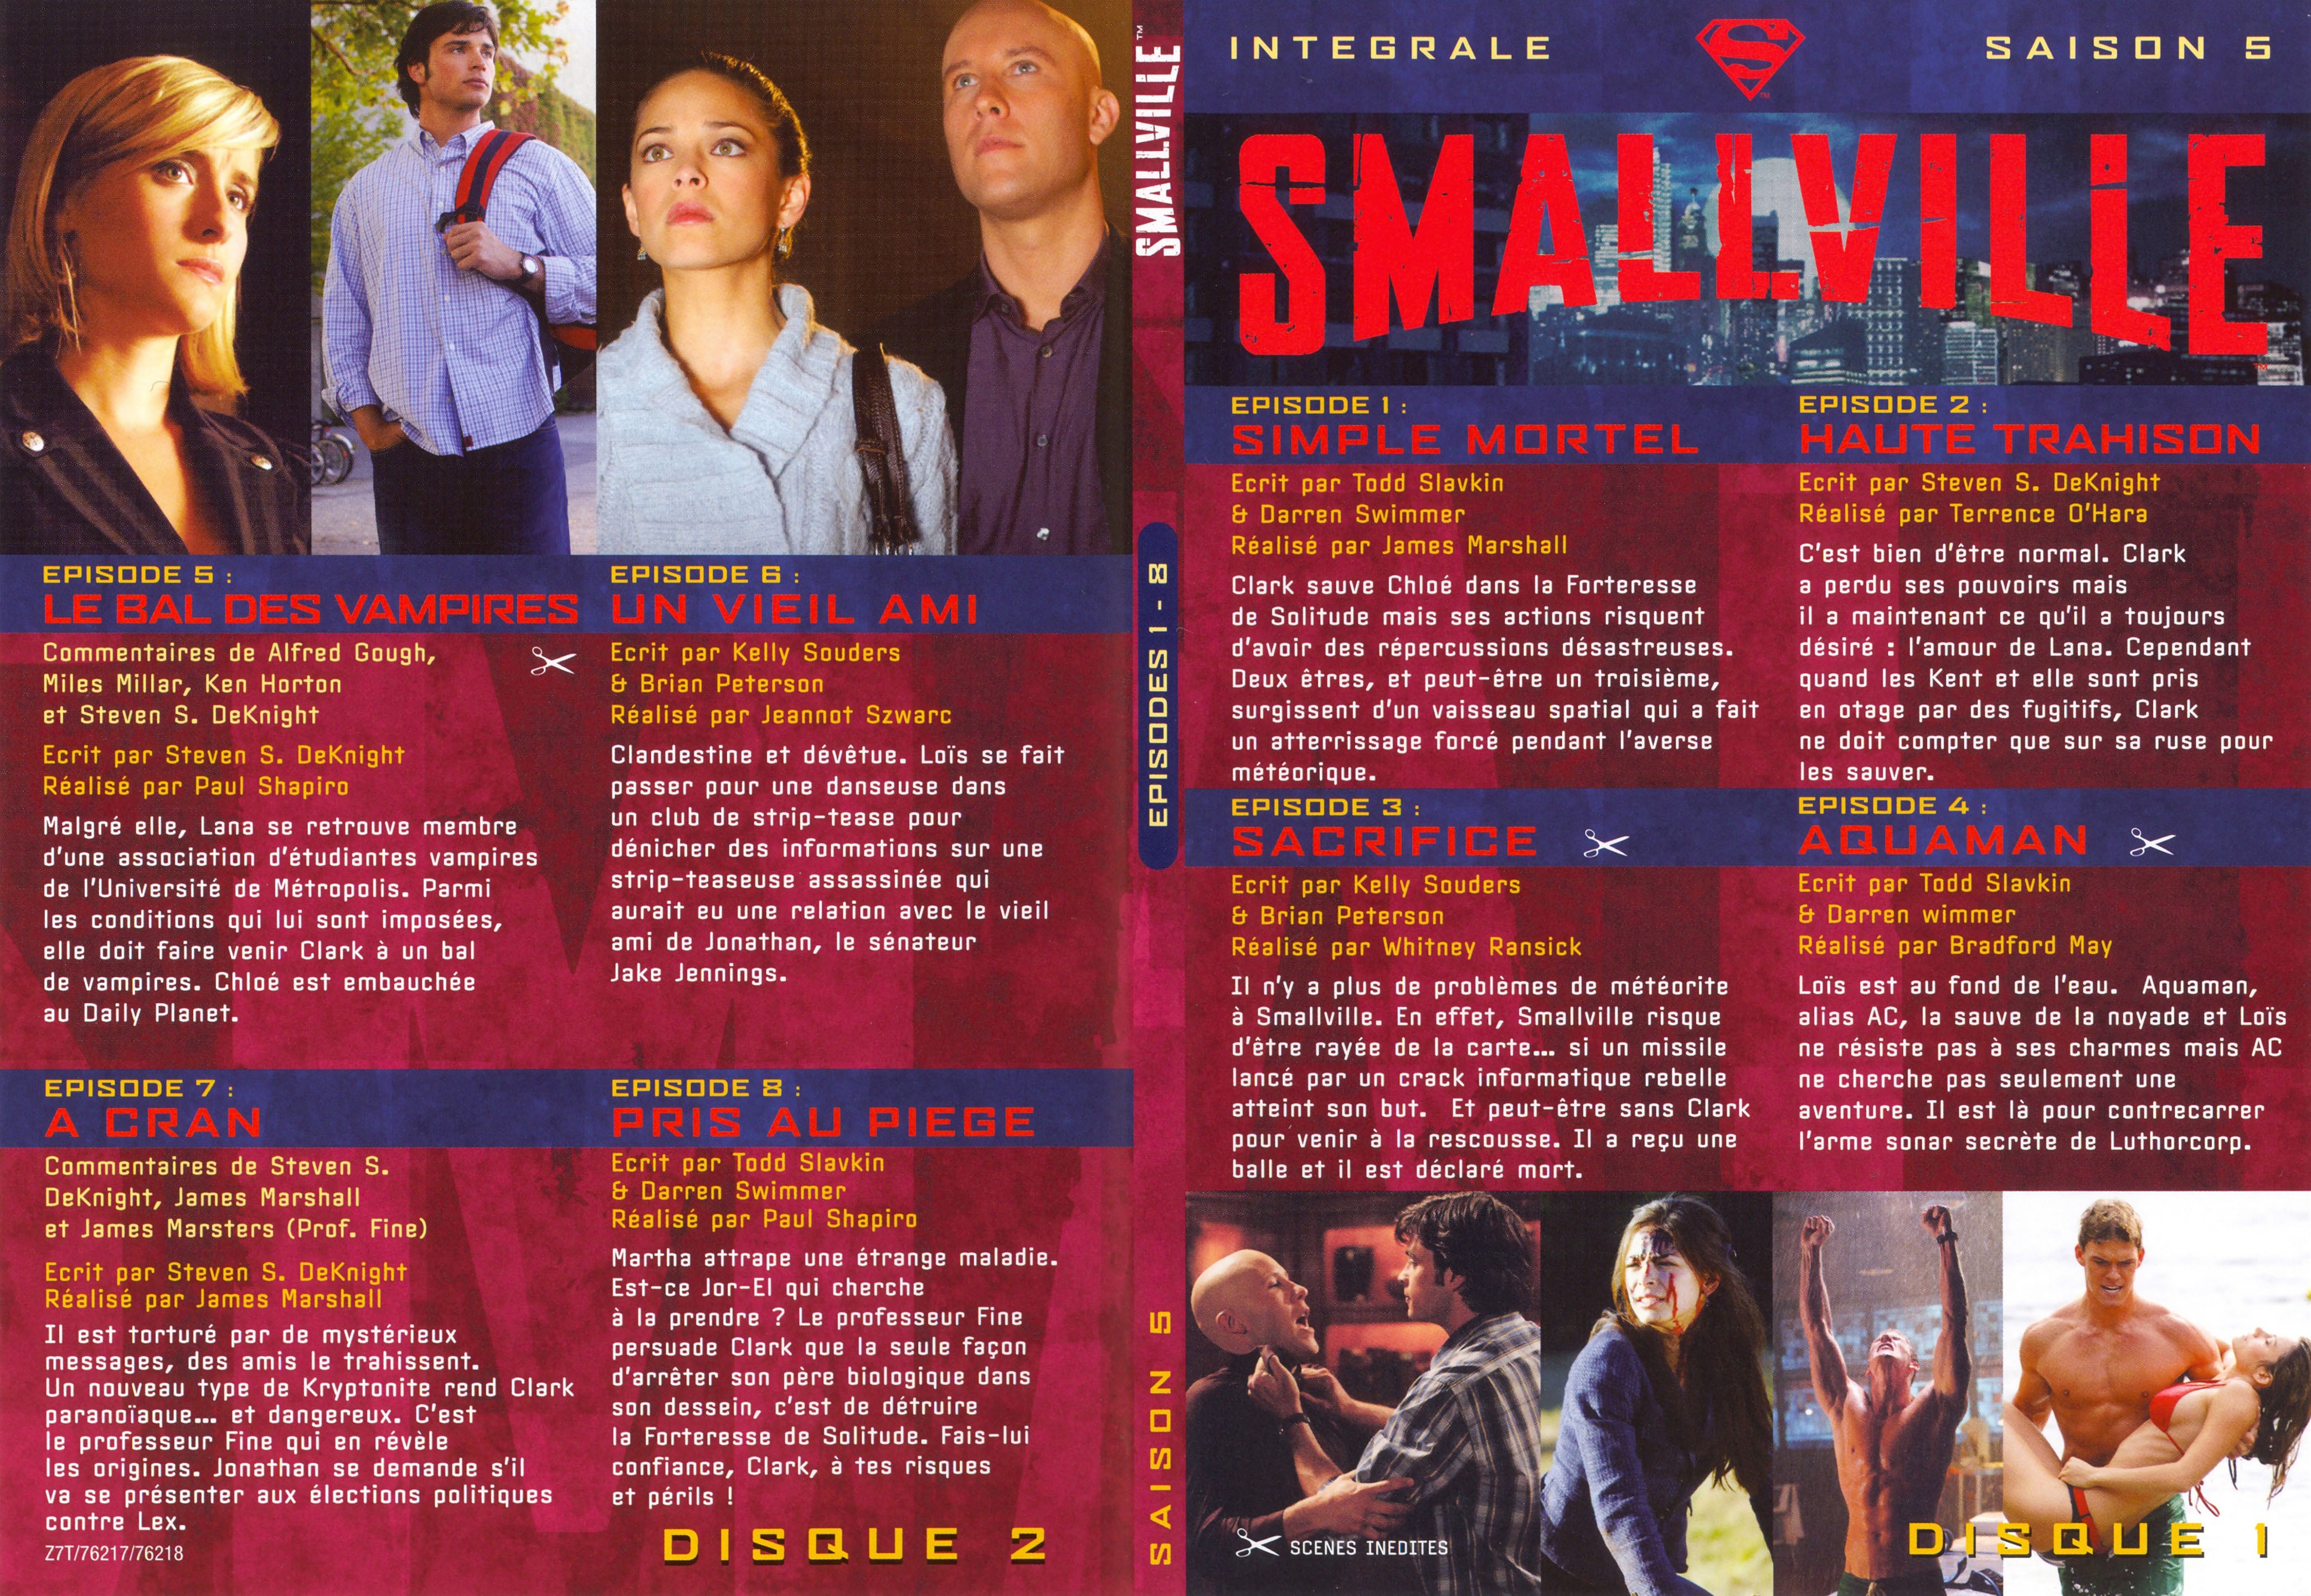 Jaquette DVD Smallville saison 5 DVD 1